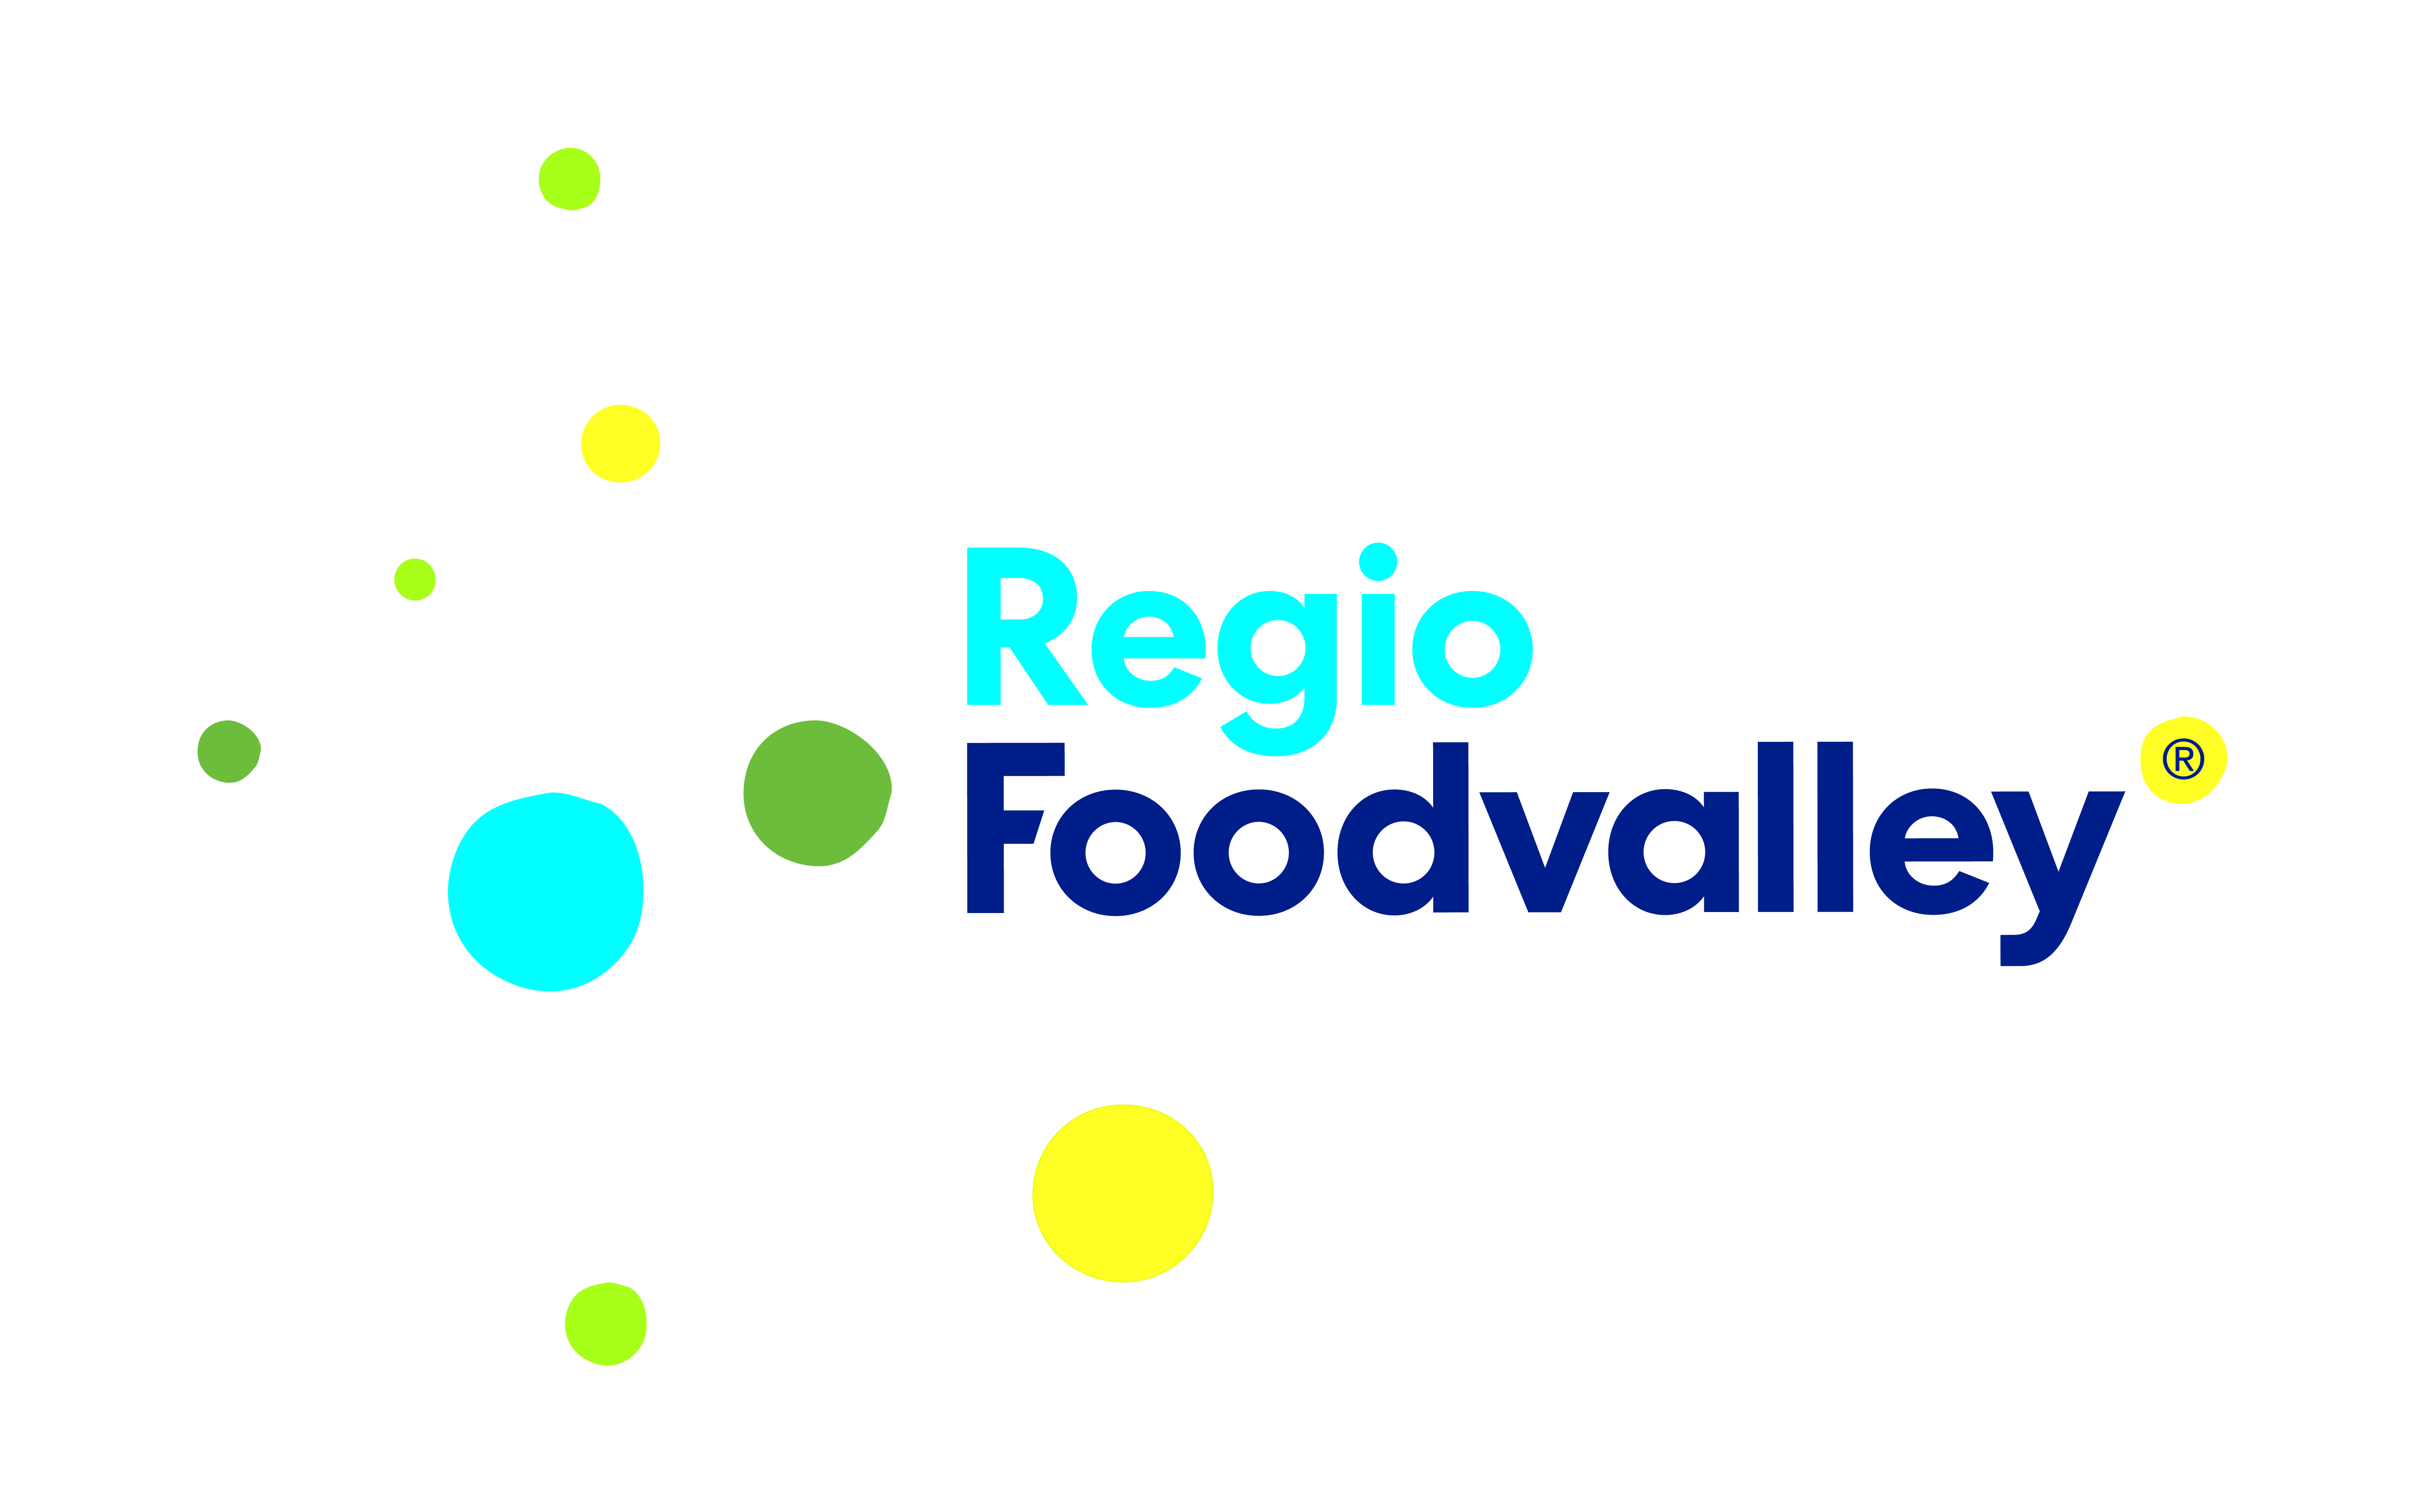 Foodvalley region